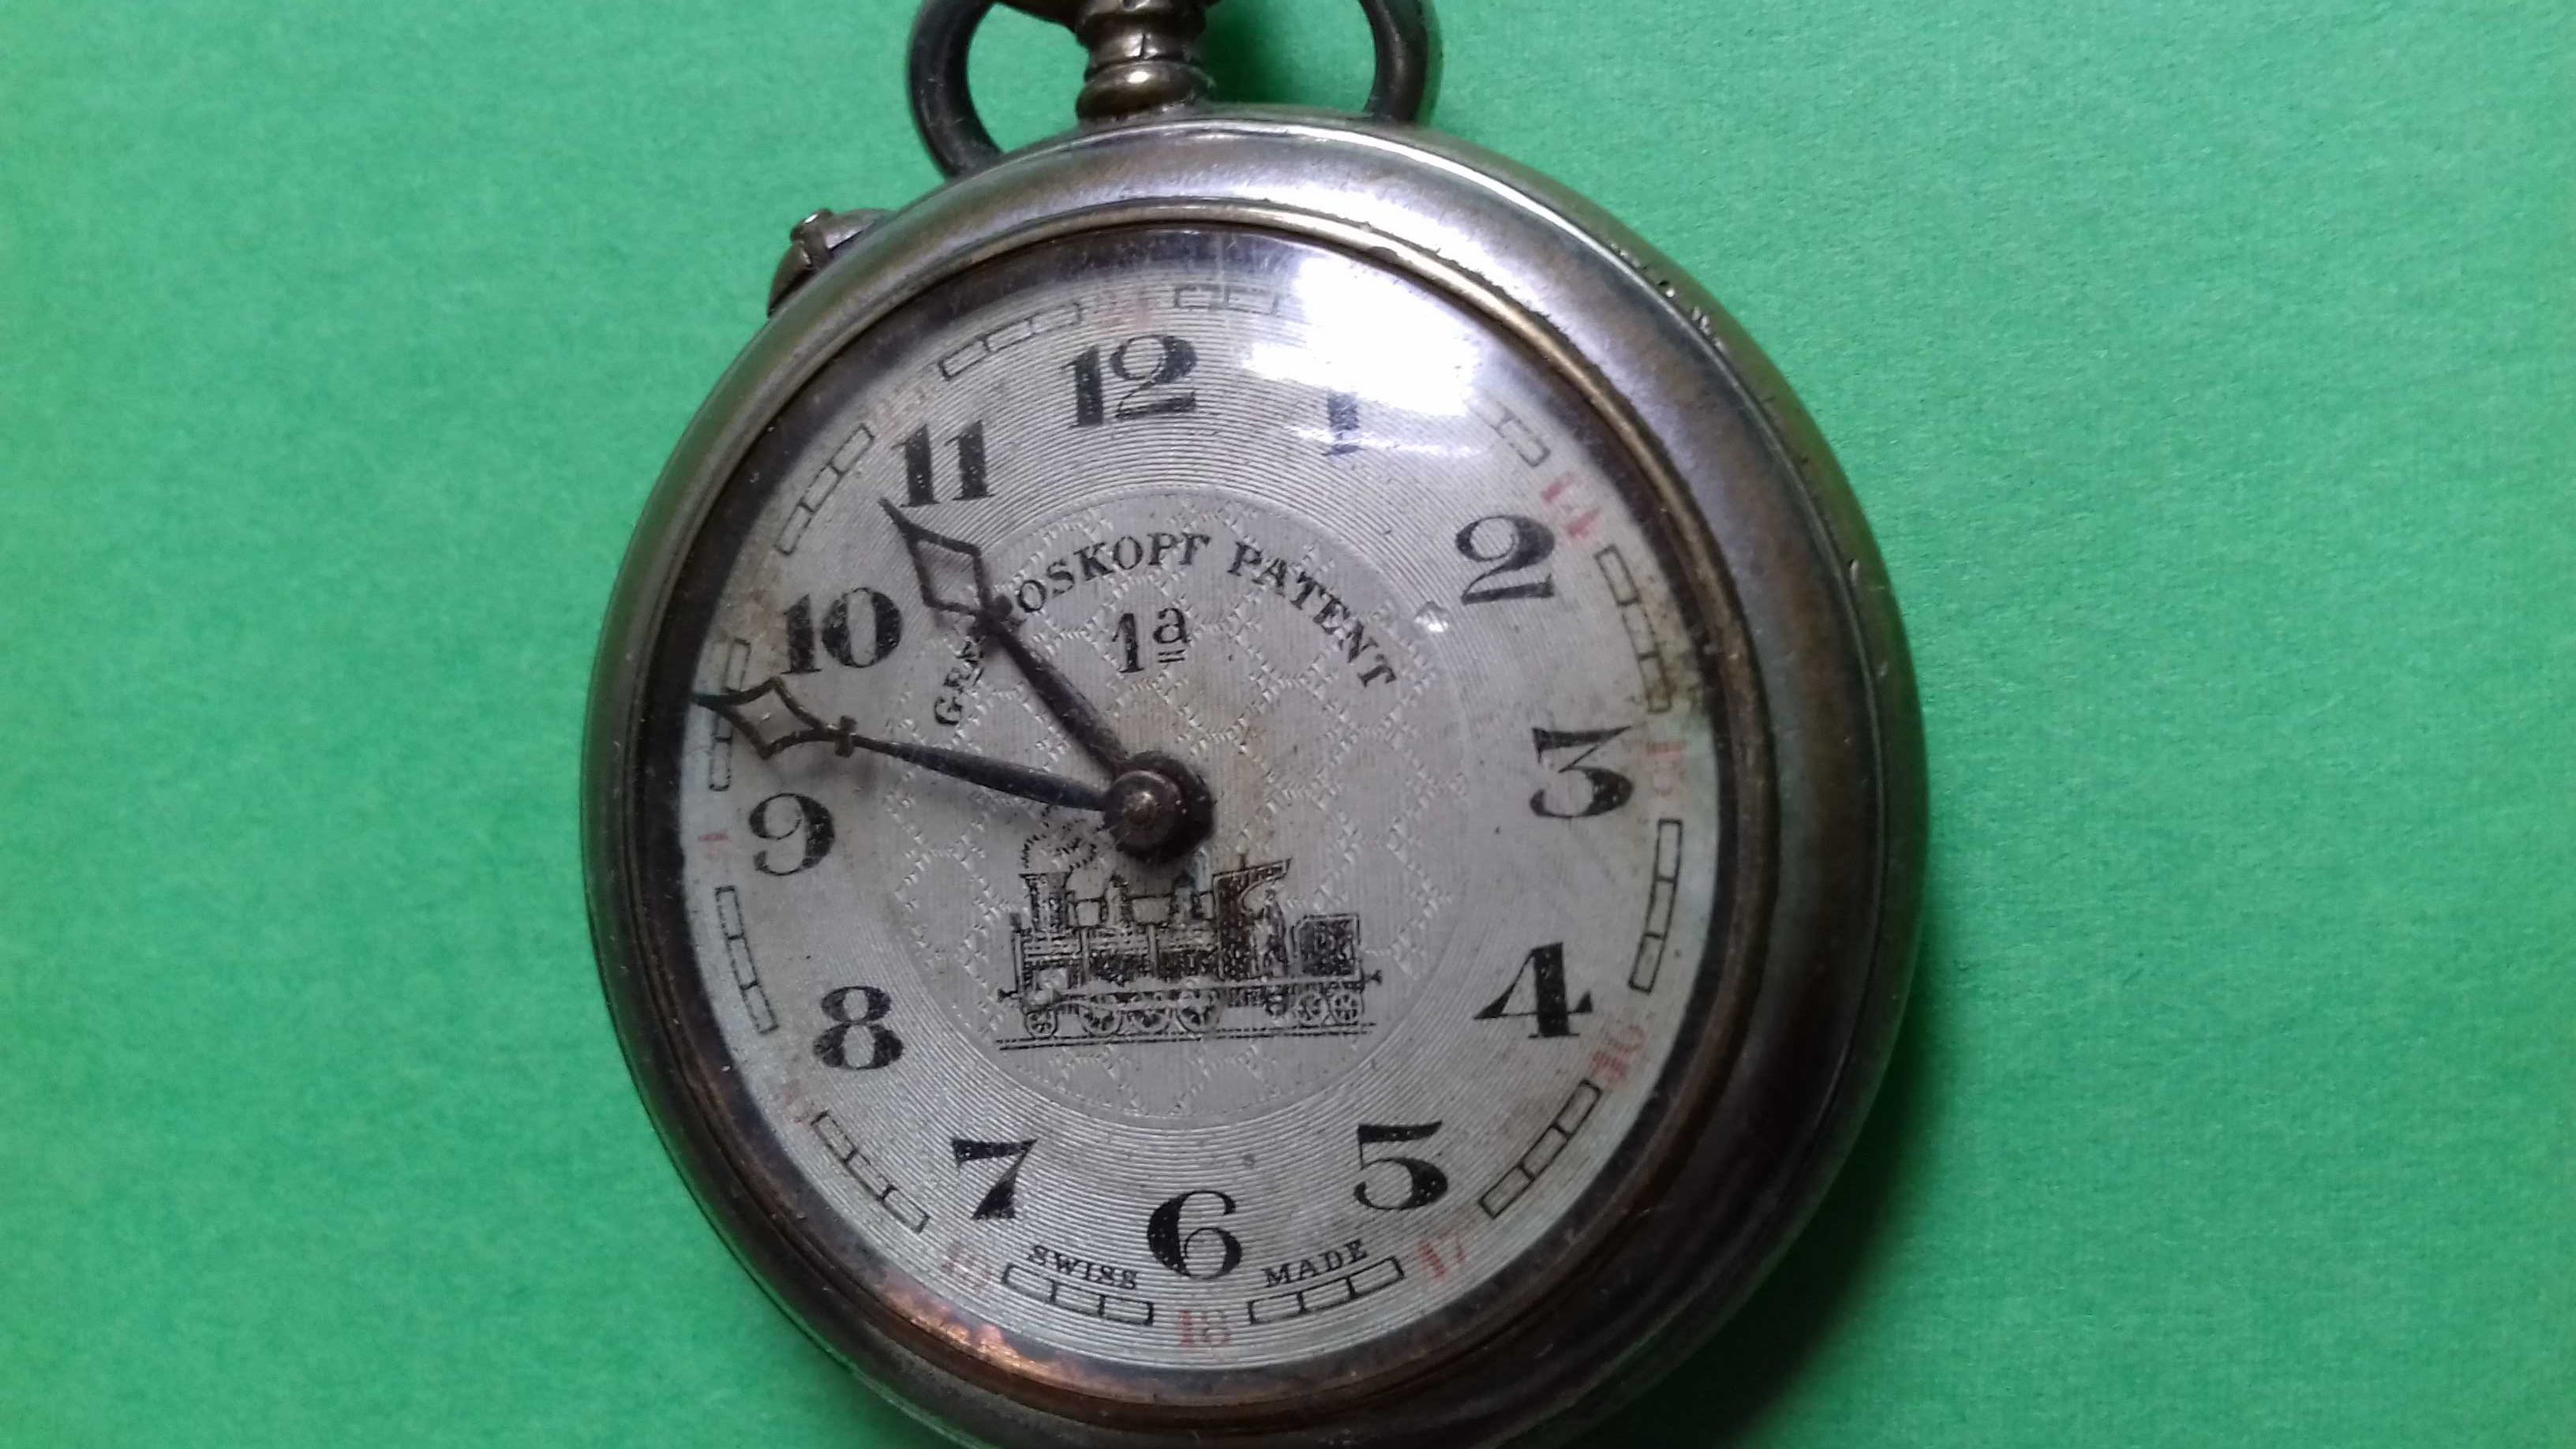 Ceas de buzunar Roskopf Patent 1a Pocket Watch